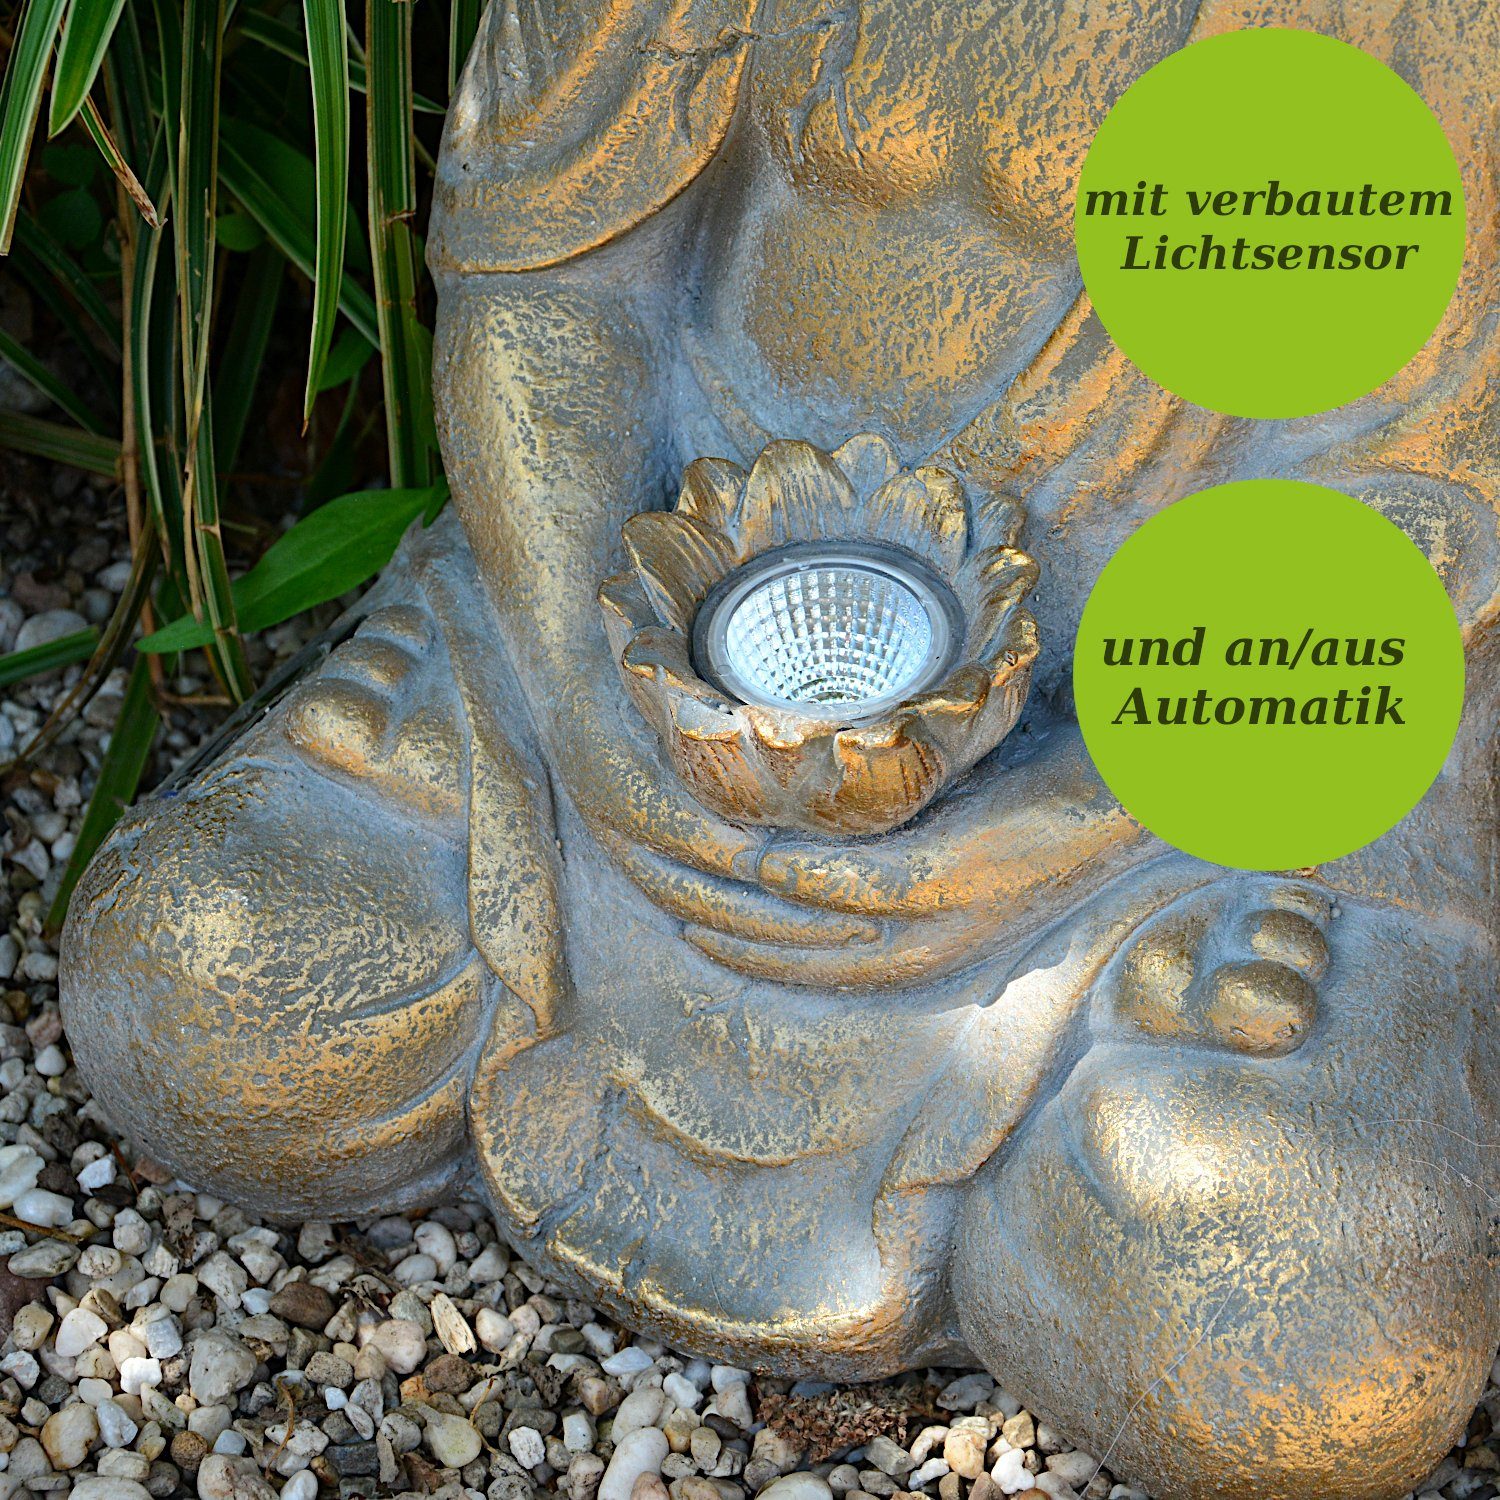 44cm Gartenfigur Buddha Figur und Sensorautomatik Garten Solarbeleuchtung INtrenDU Sensorautomatik, mit